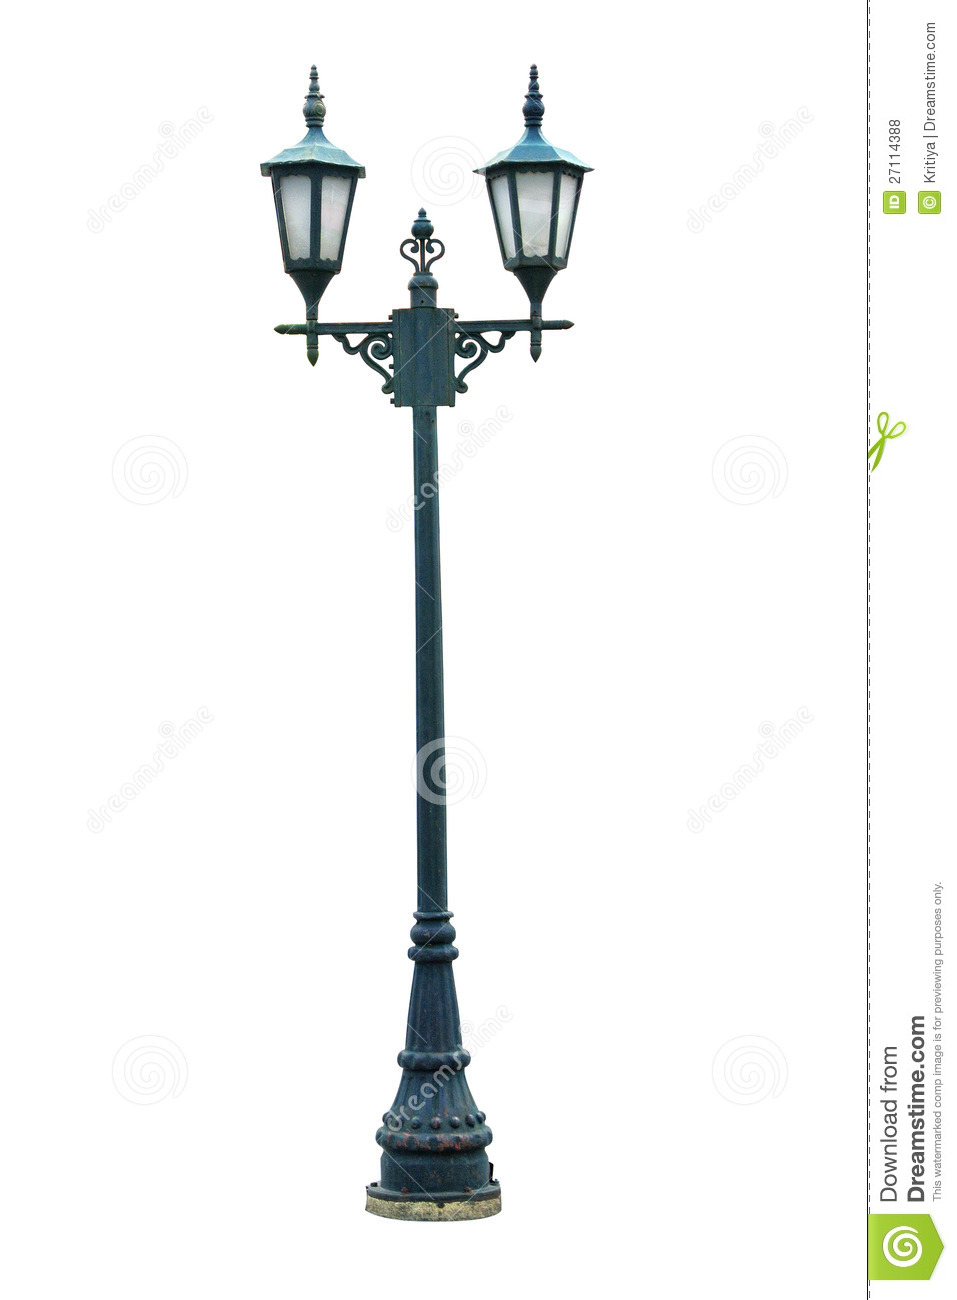 Antique Lamp Post Lamppost Street Road Light Pole Royalty Free Stock